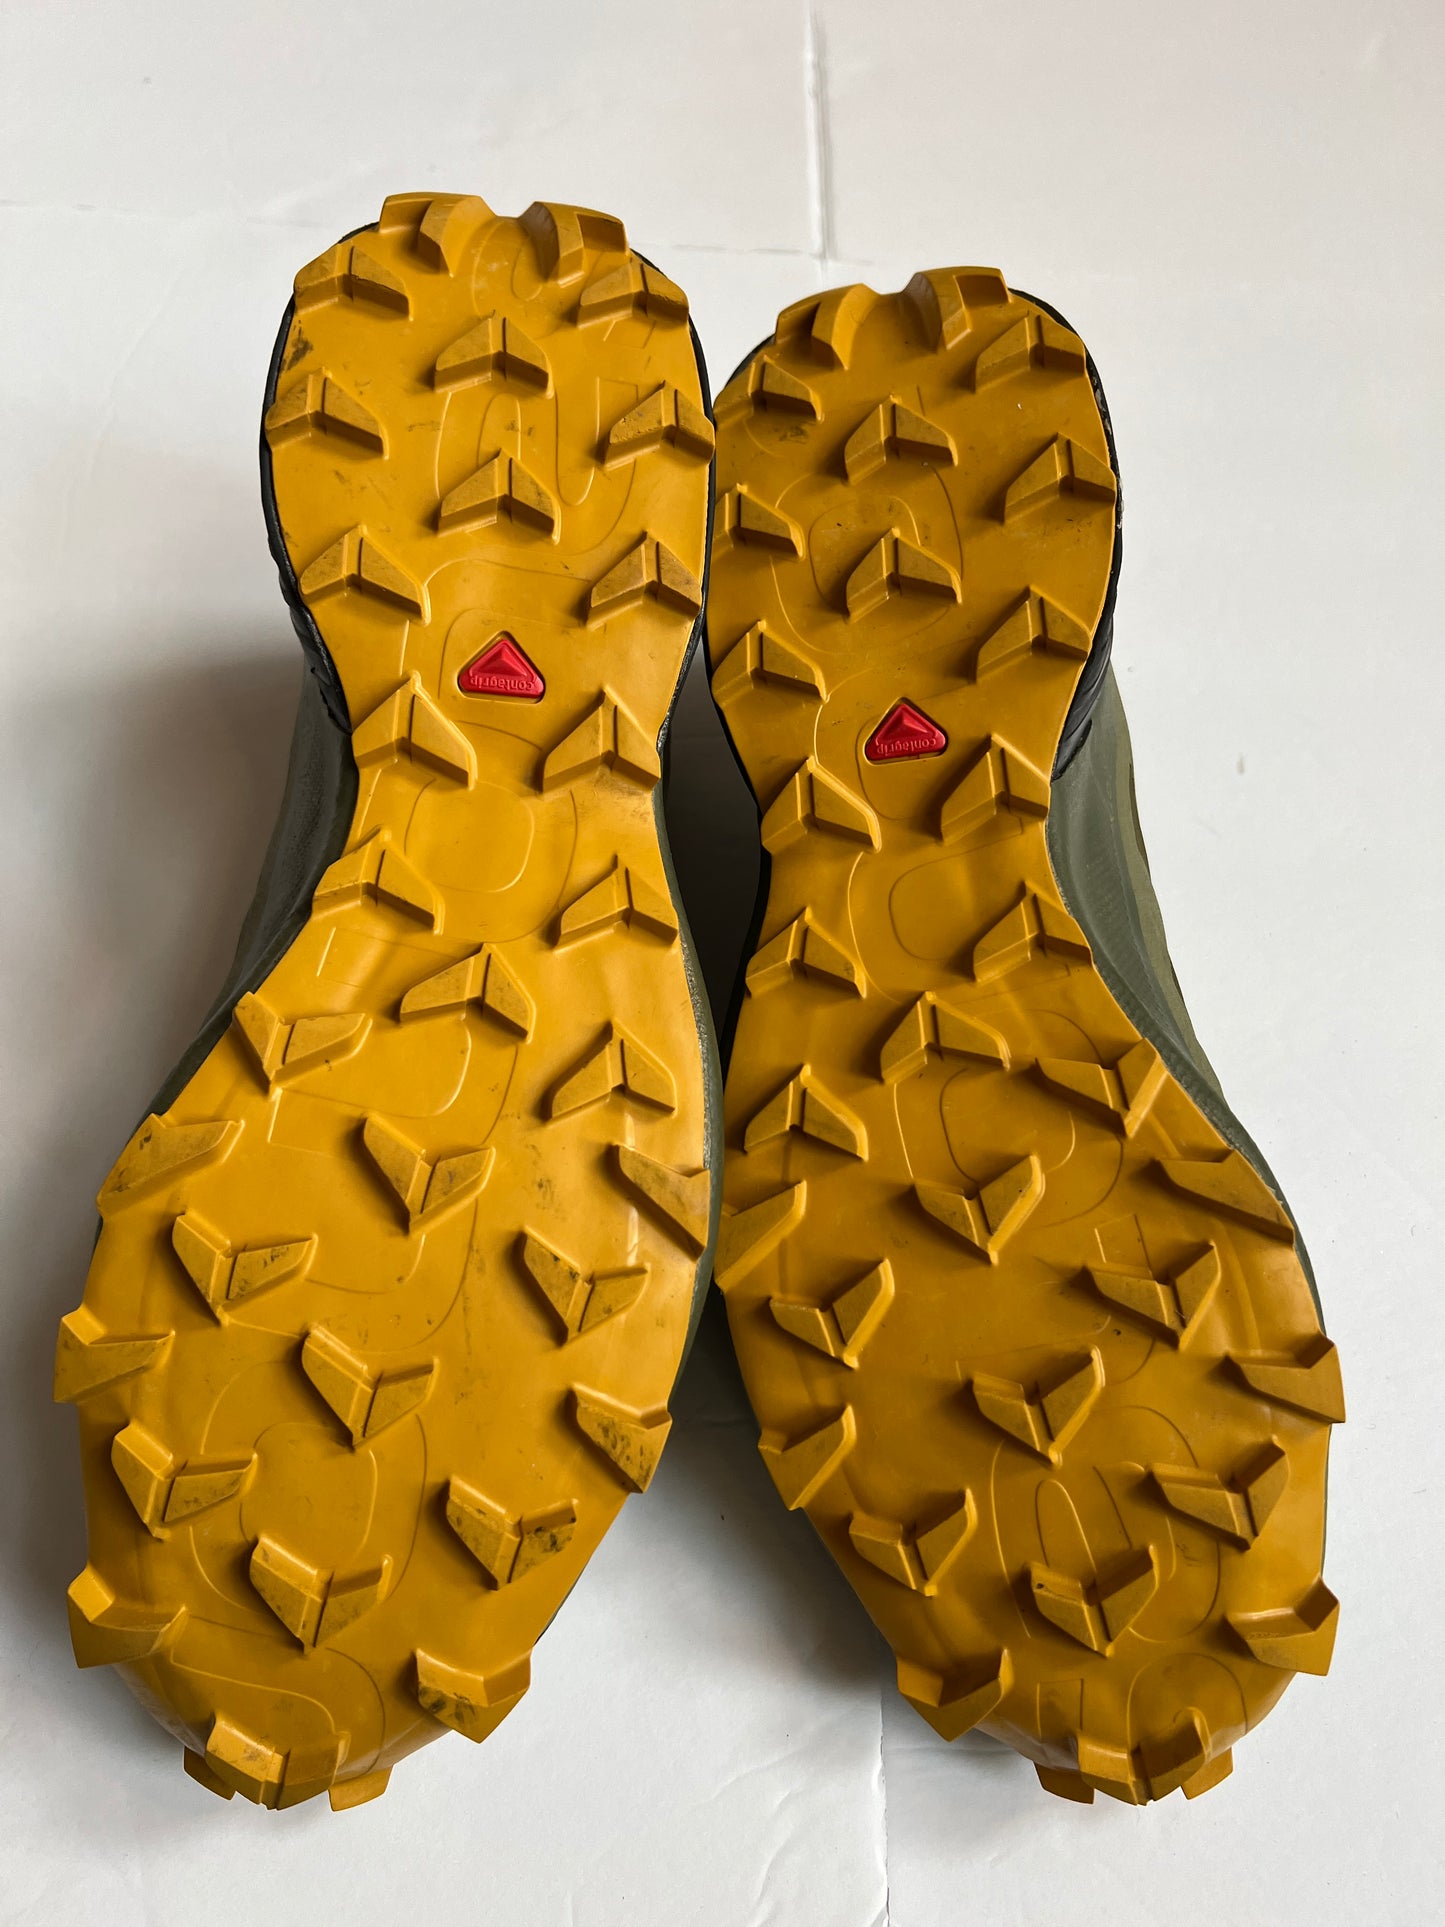 Mens Shoe Size 11.5 Salomon Ultra 4 goretex hiking shoe